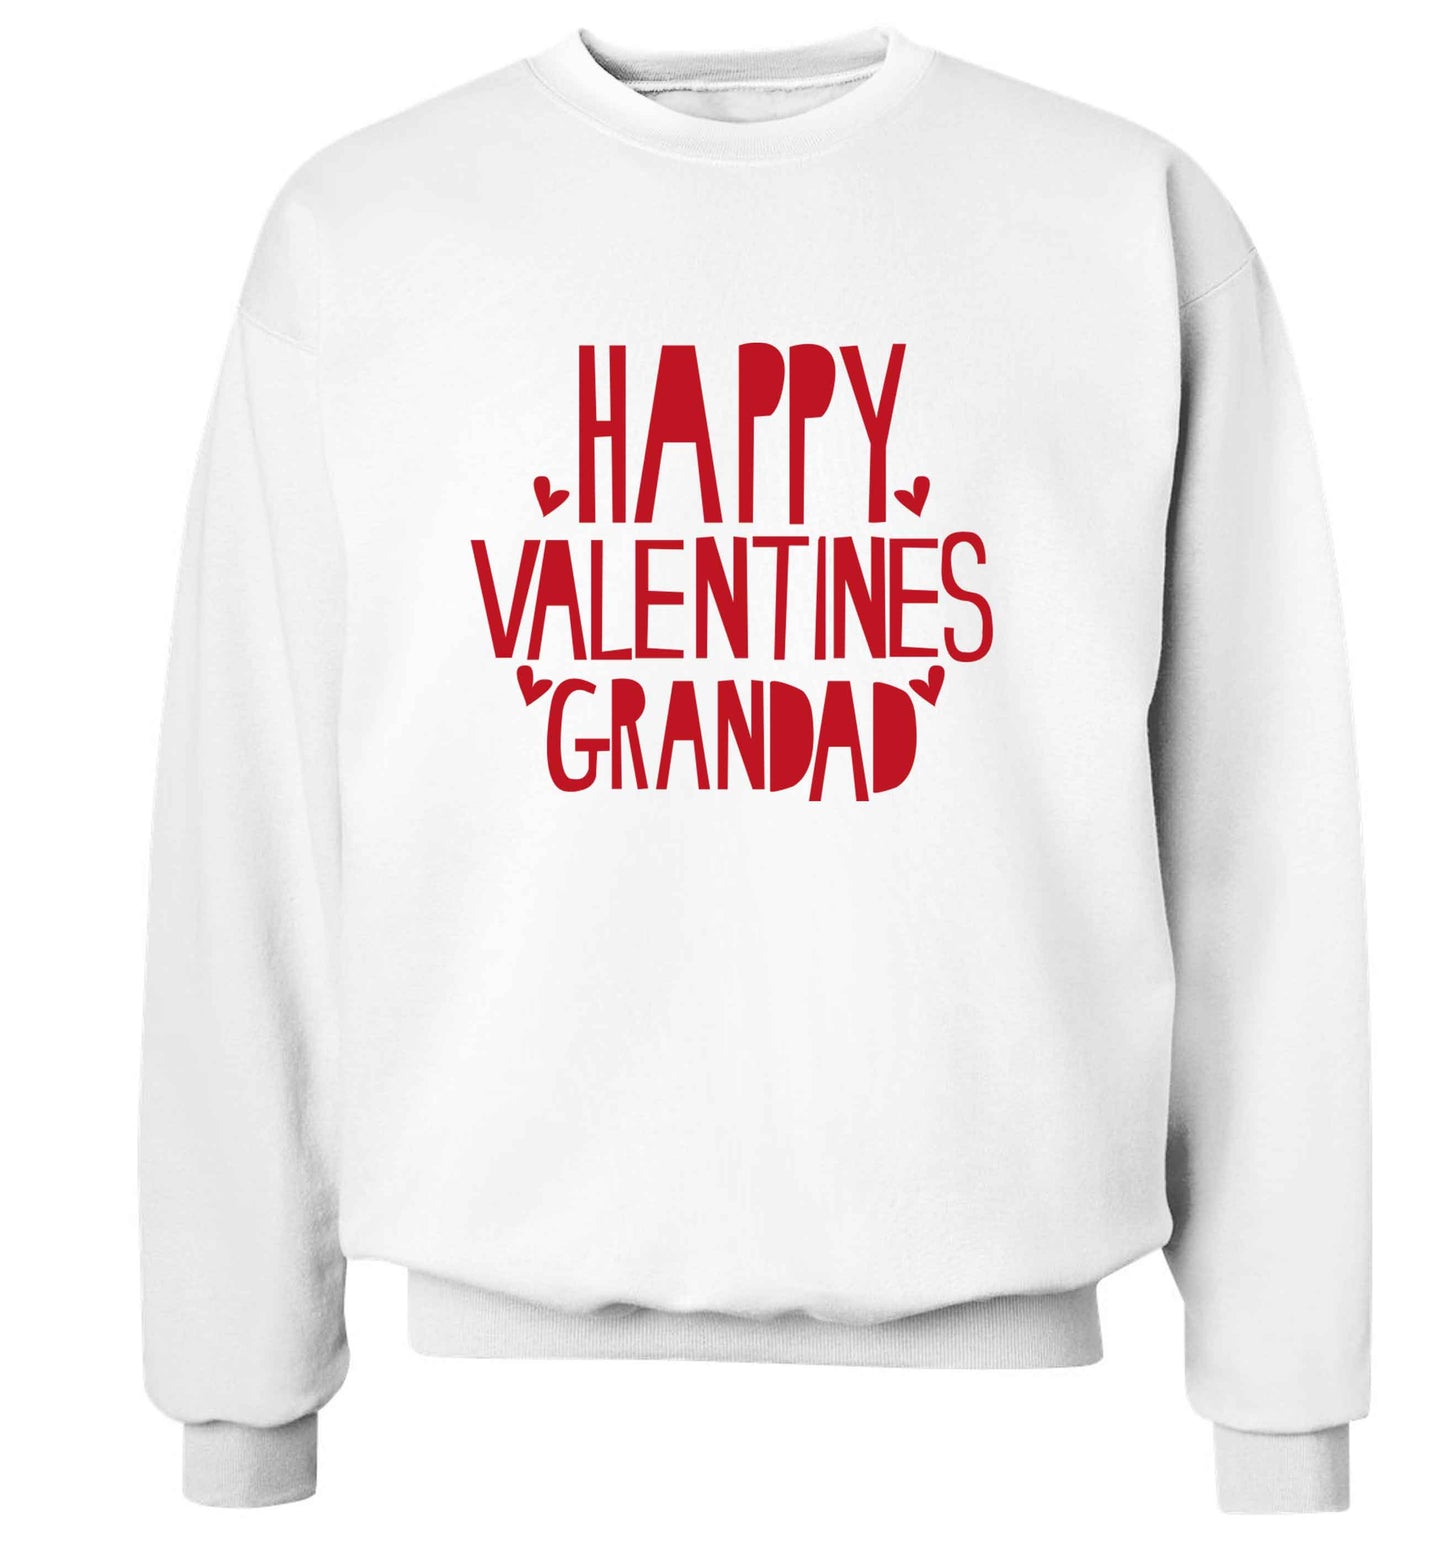 Happy valentines grandad adult's unisex white sweater 2XL